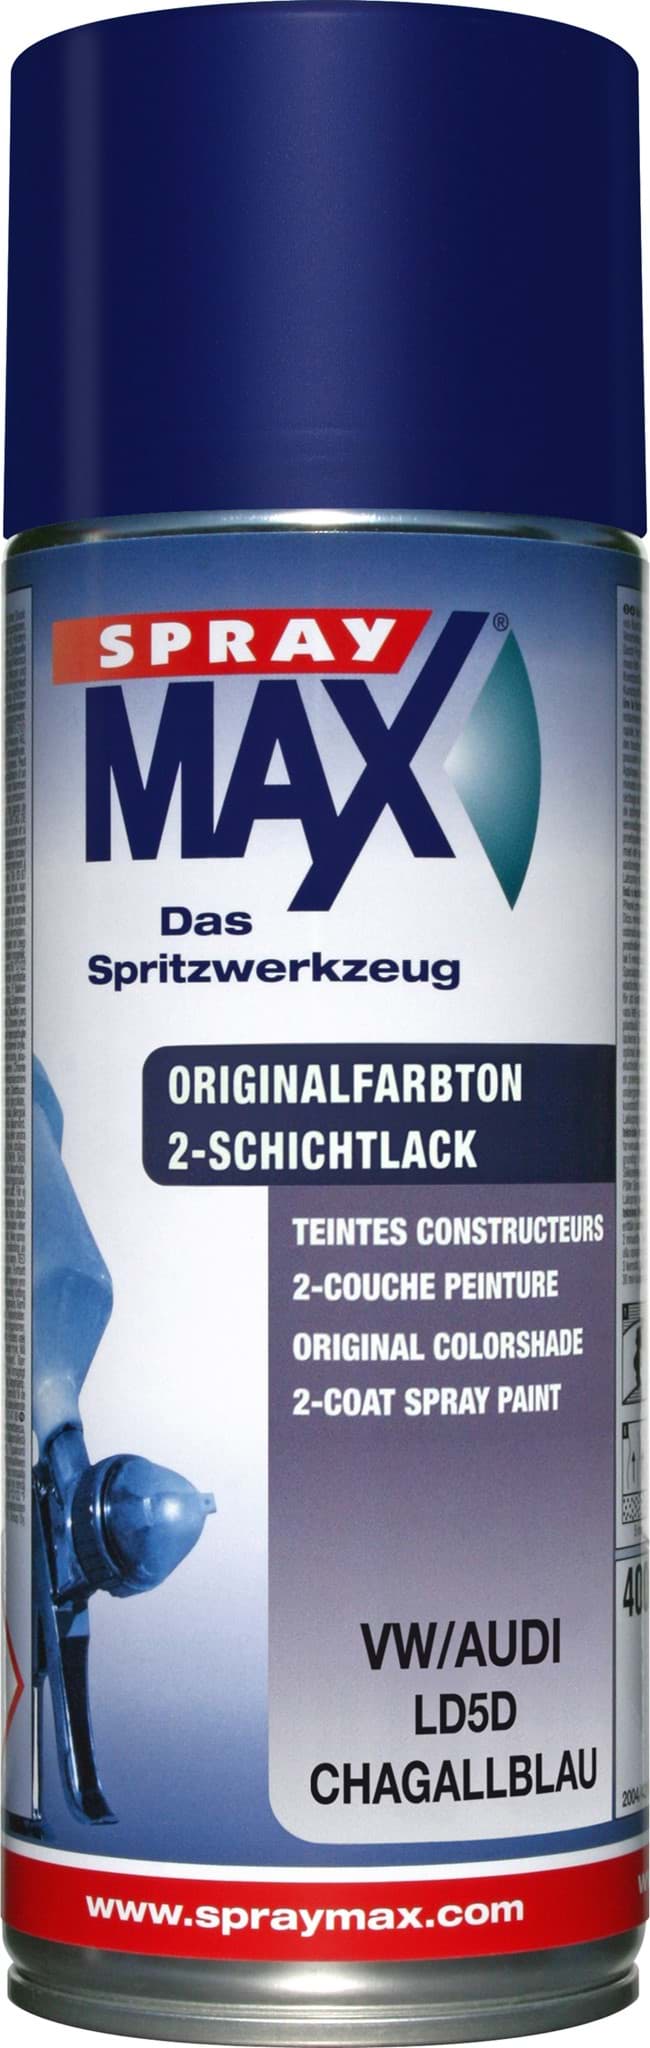 Picture of SprayMax Originalfarbton für VW LD5D chagallblau